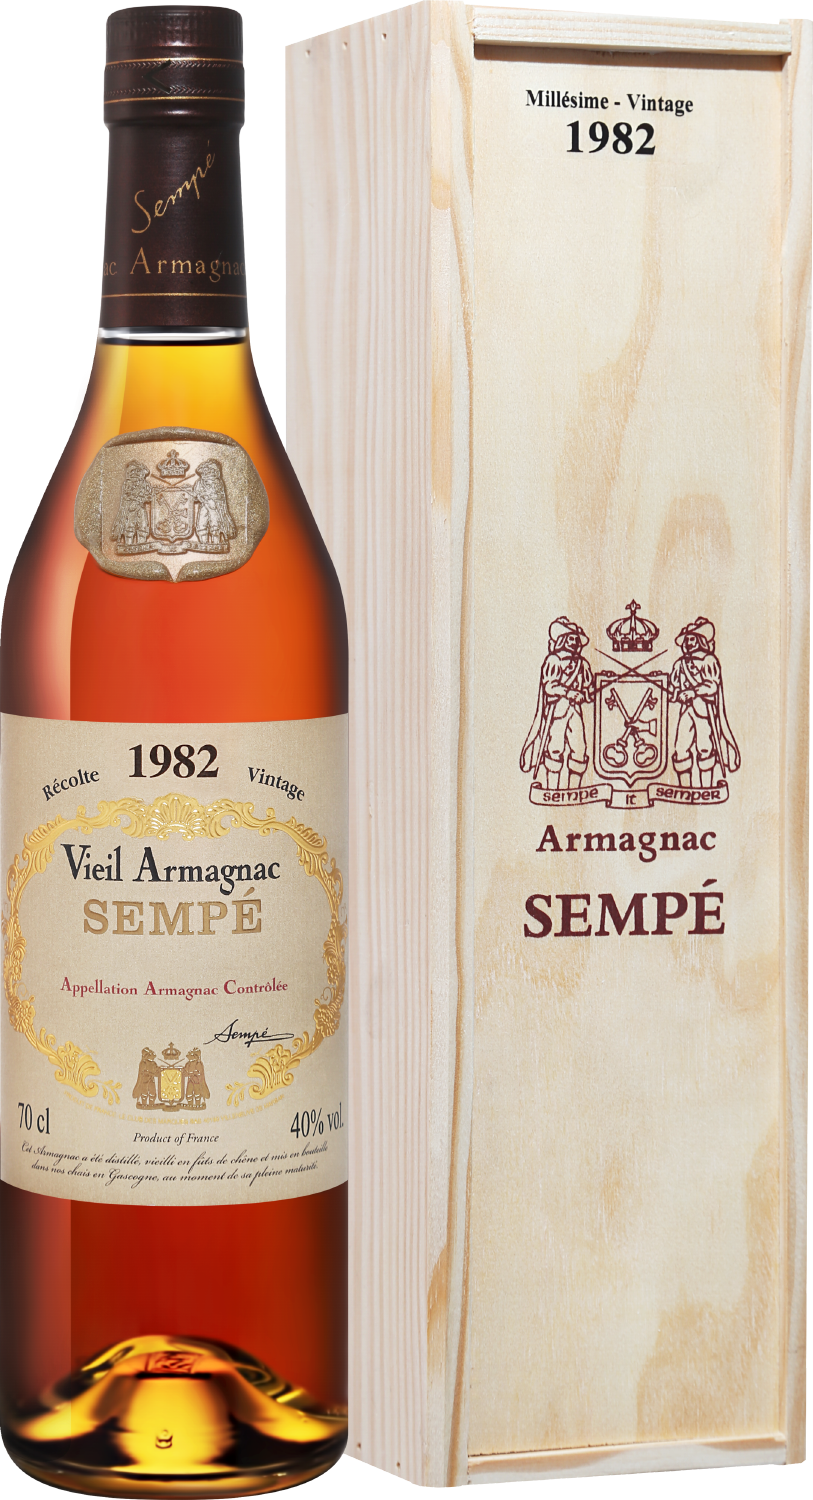 Sempe Vieil Vintage 1982 Armagnac AOC (gift box) sempe vieil vintage 1982 armagnac aoc gift box